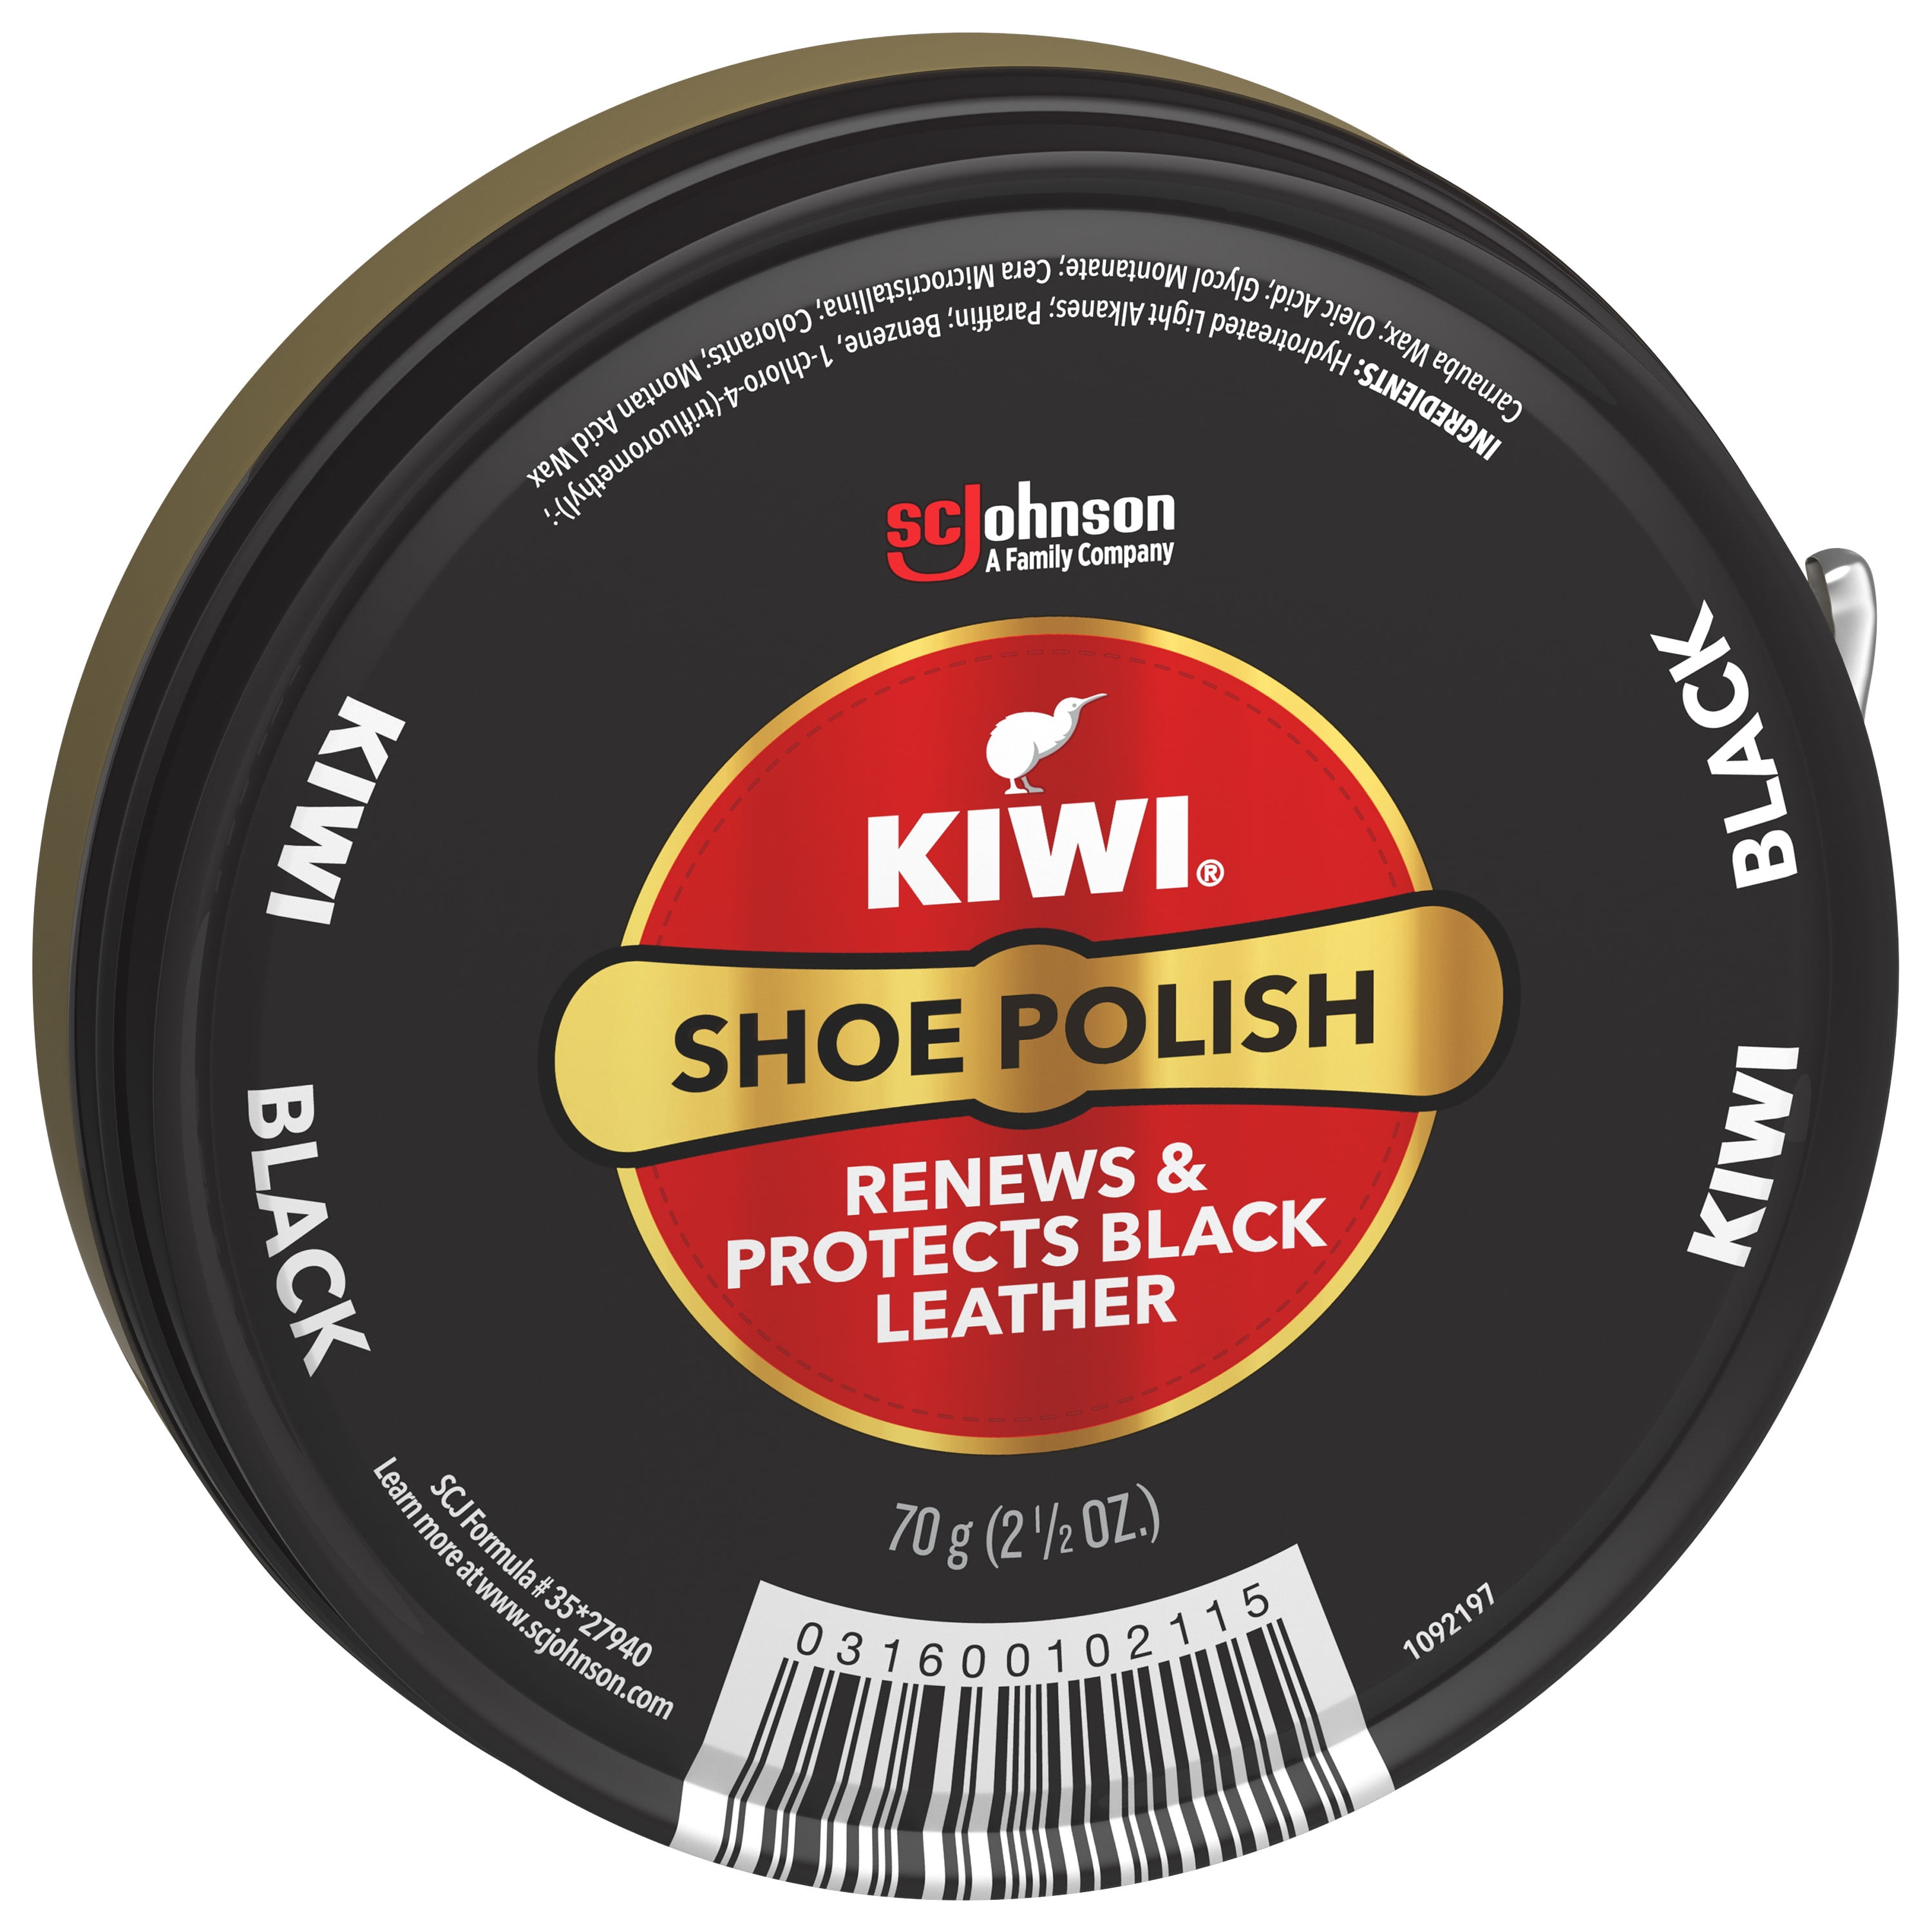 kiwi polish price